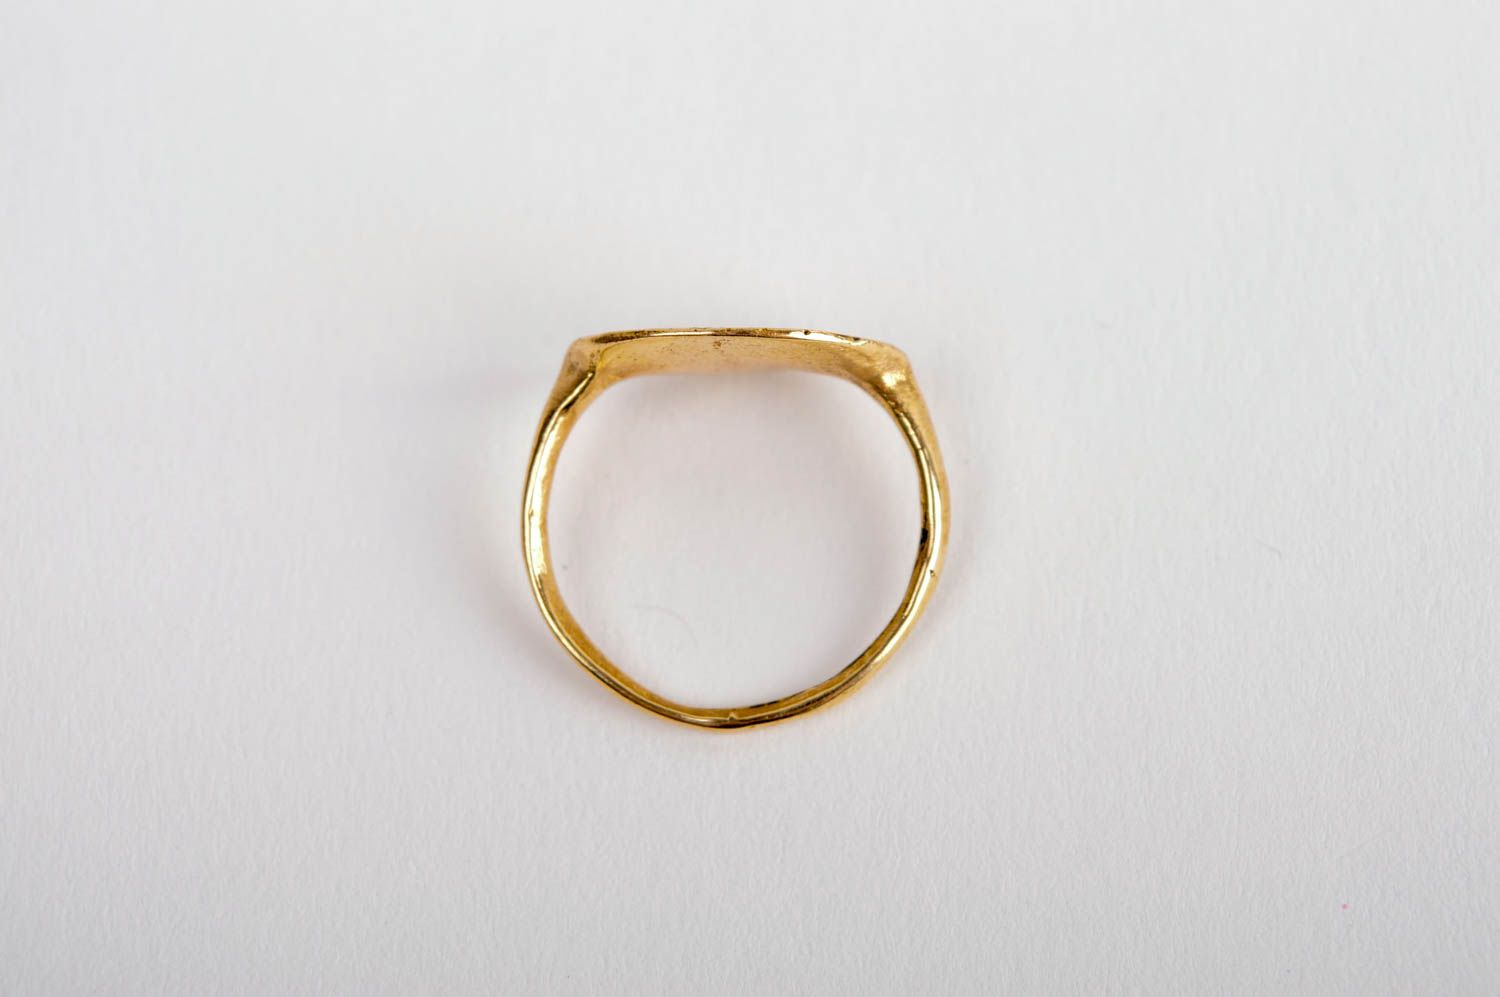 Metal designer ring beautiful stylish ring metal accessories cute gift photo 5